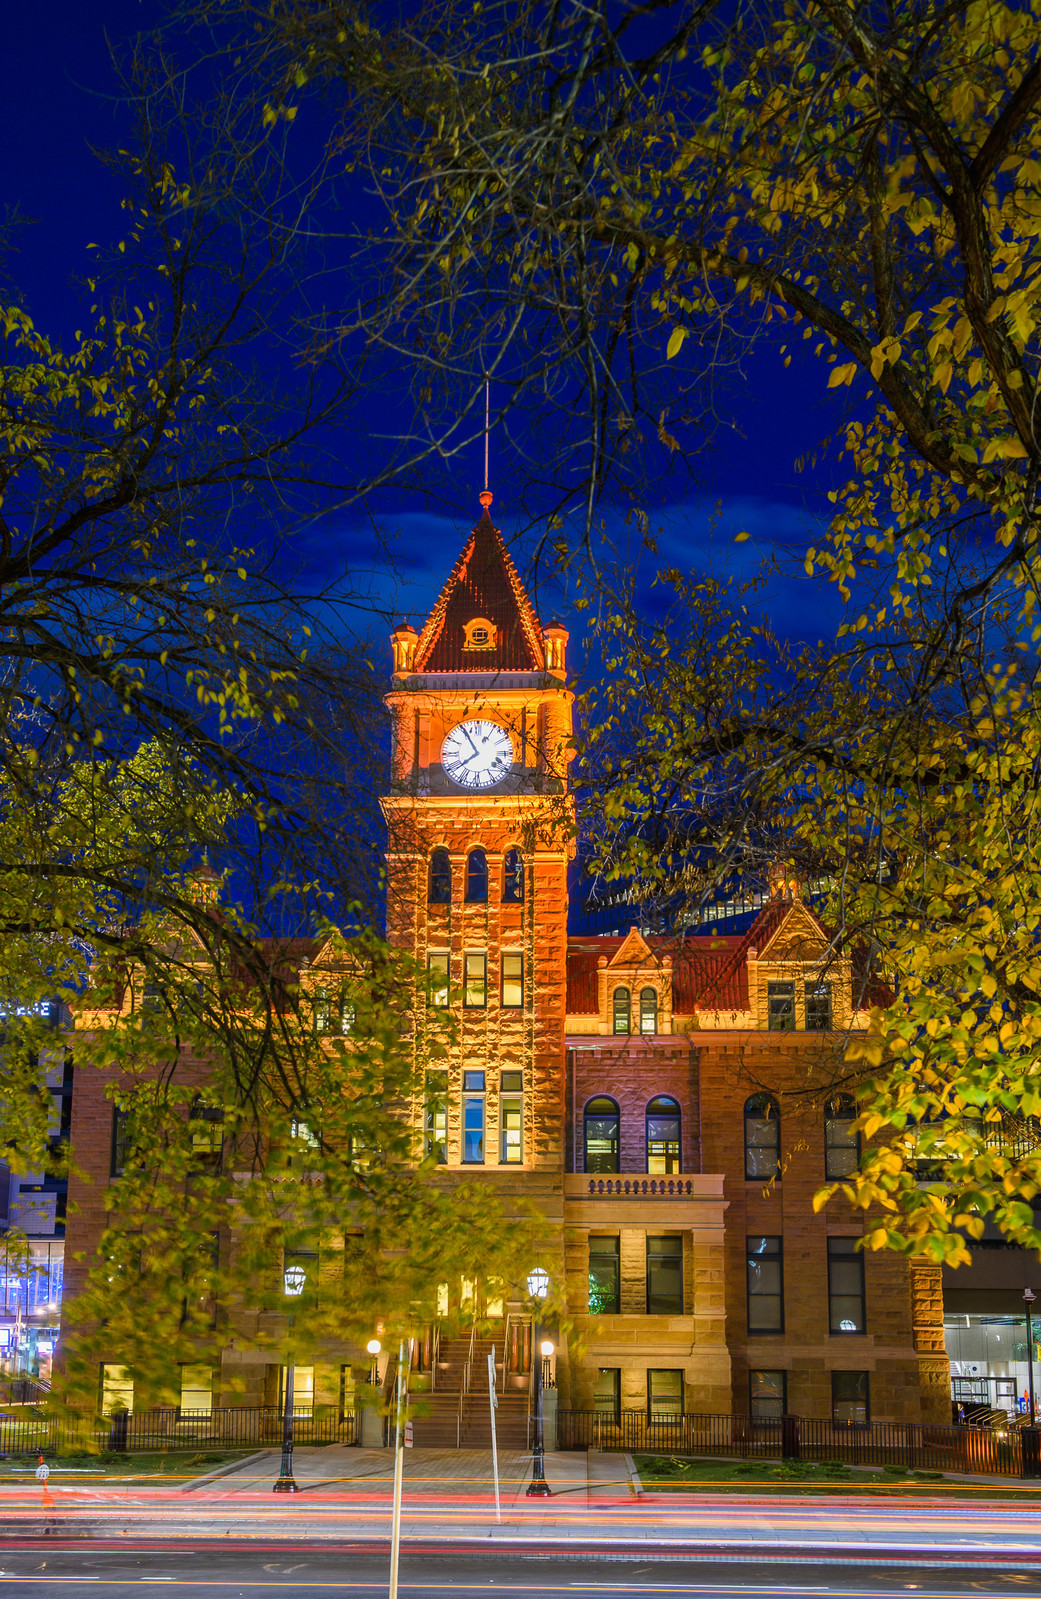 Historic City Hall illuminated at night